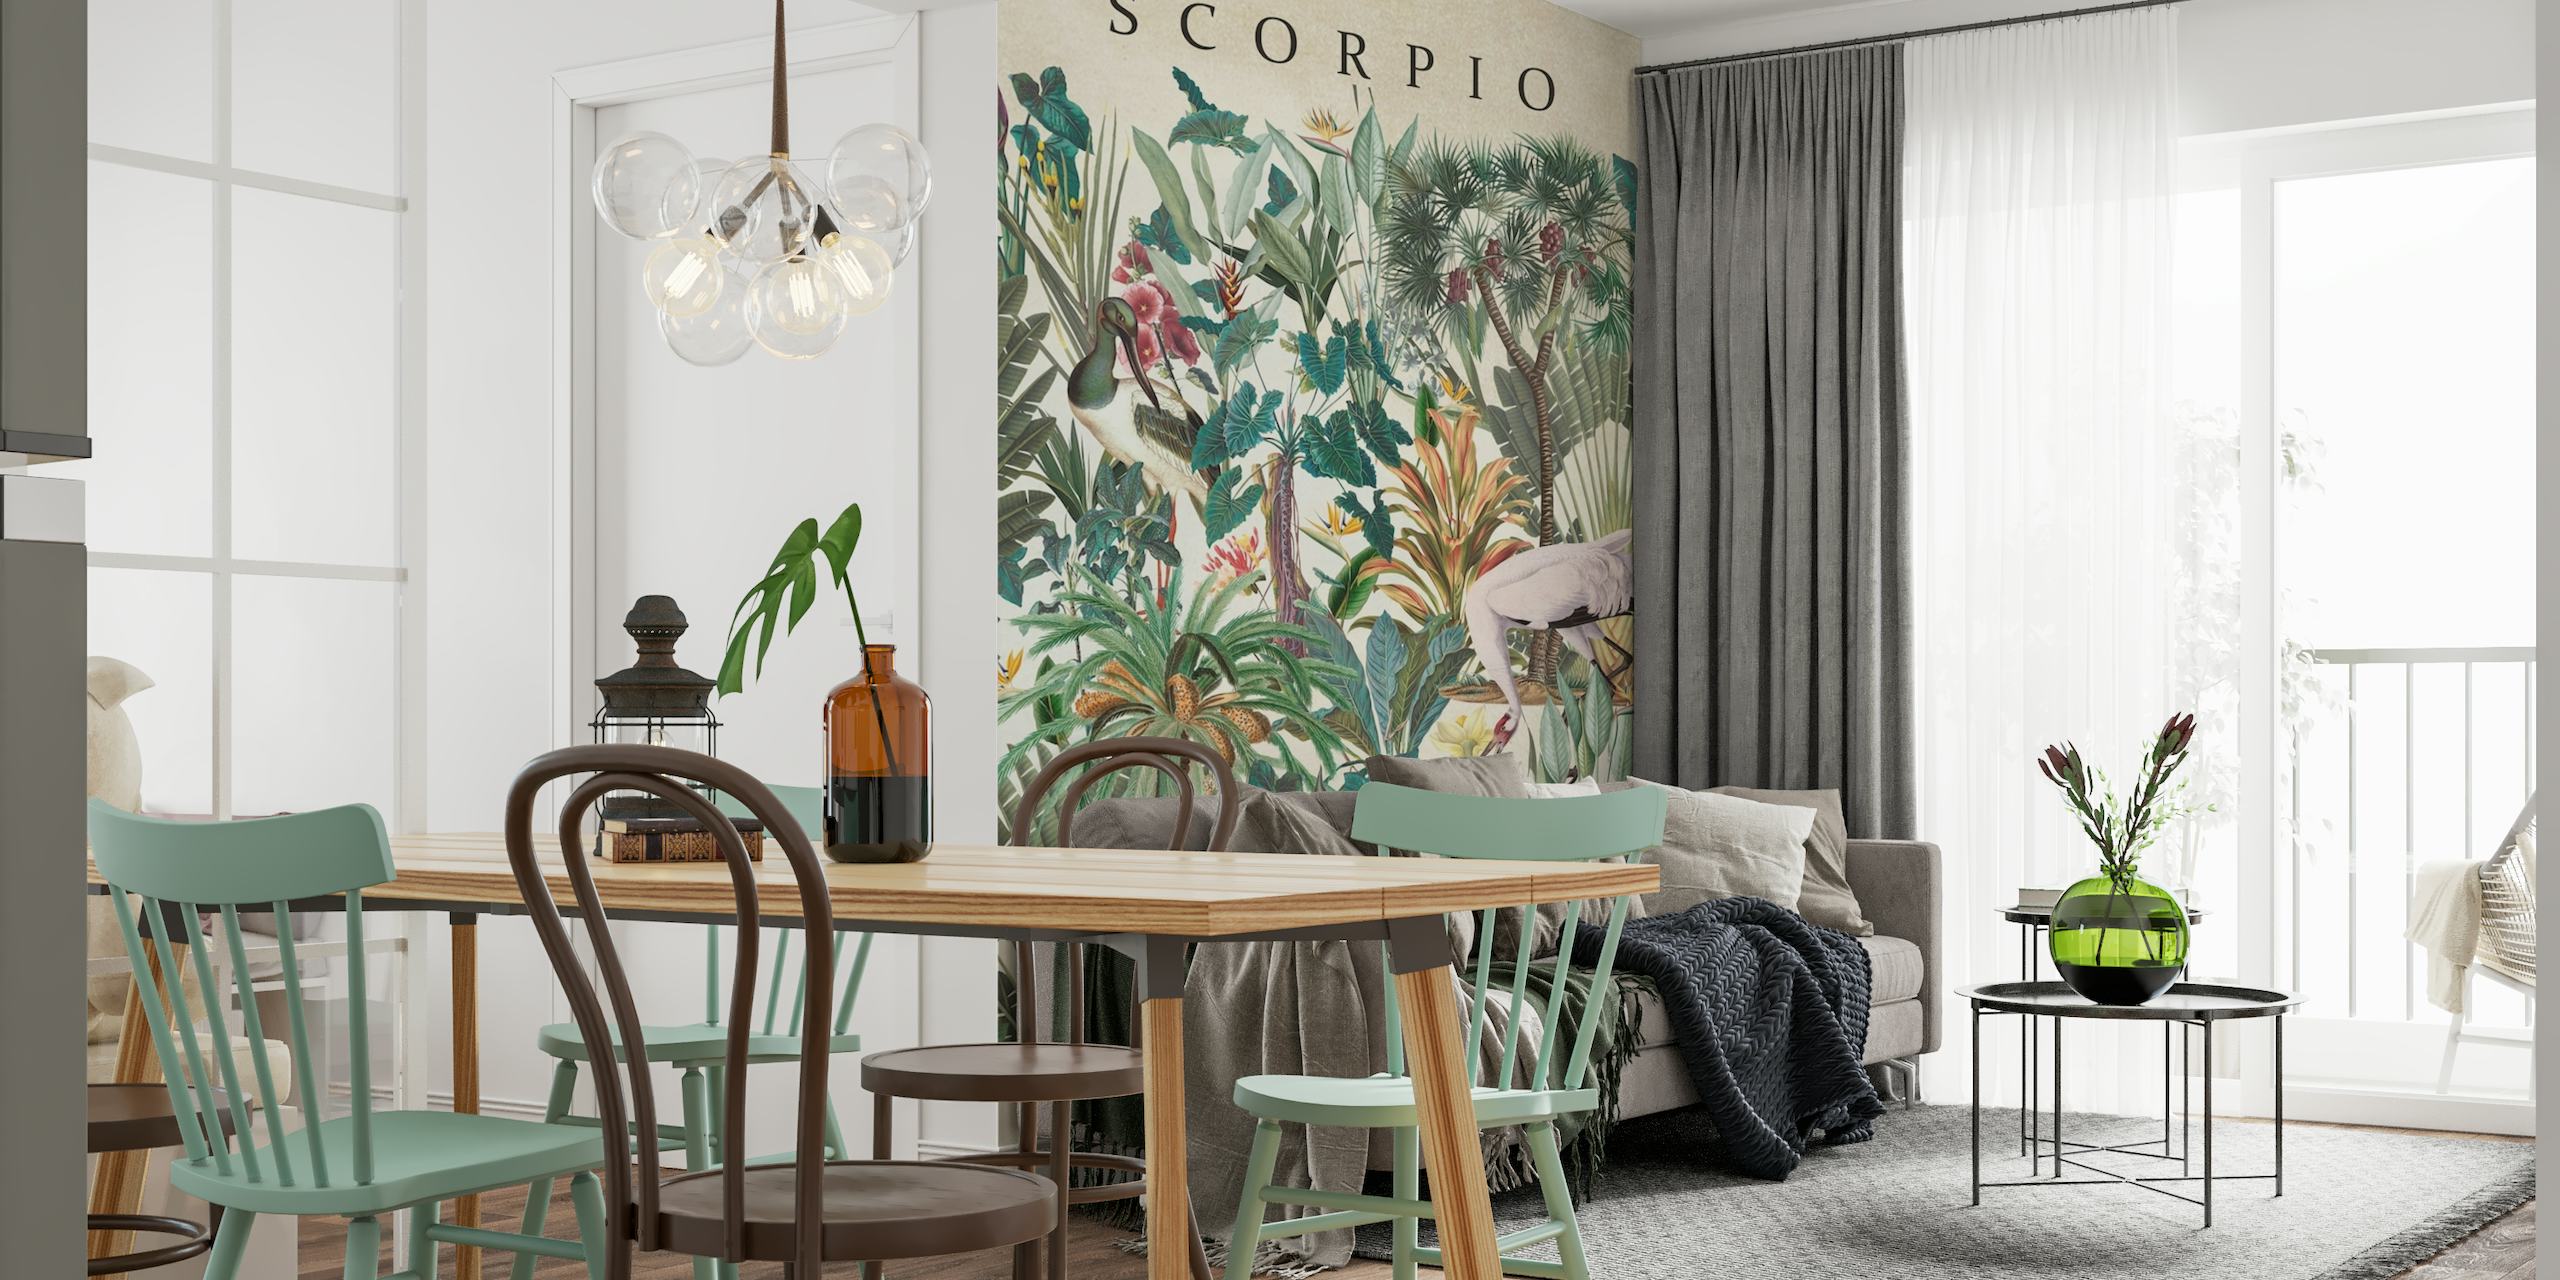 Scorpio Wallpaper with Intricate Flora and Fauna Design